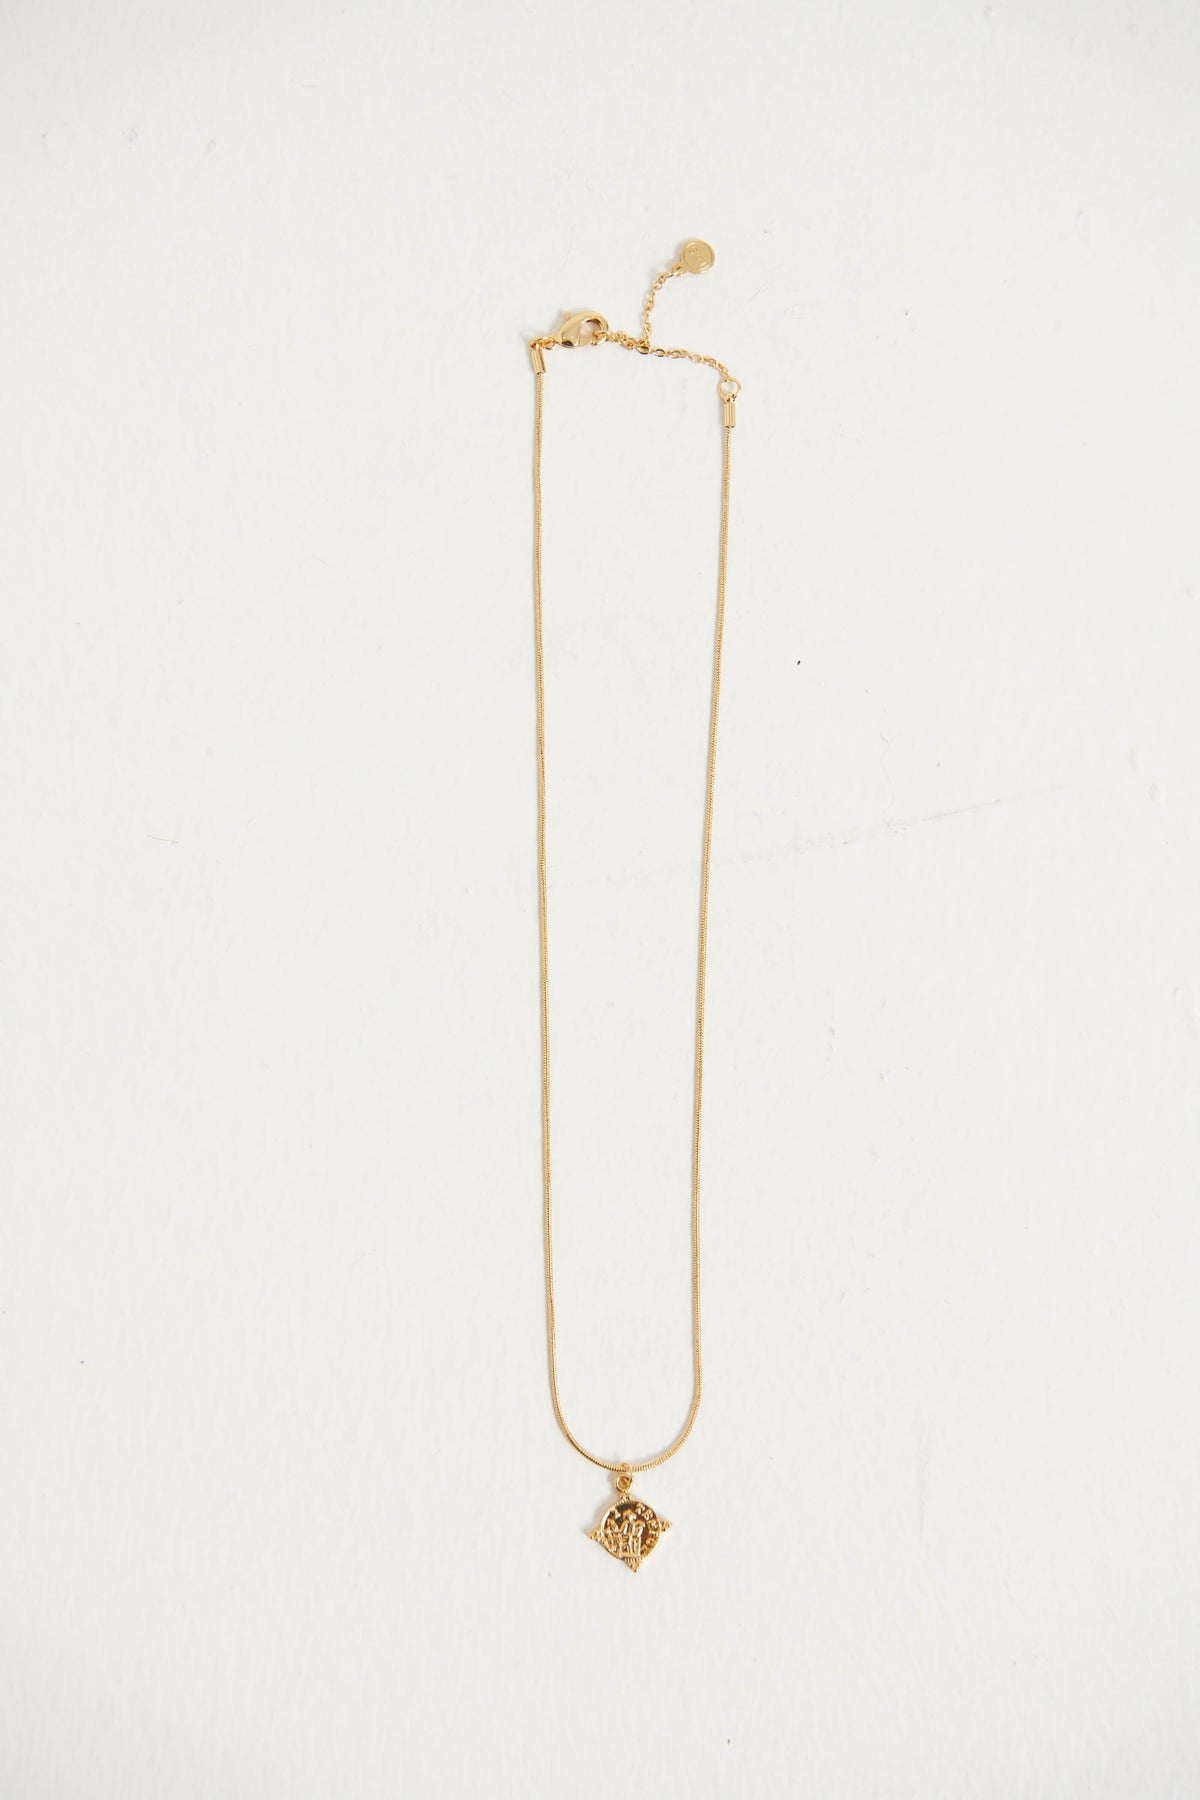 Skylar Gold Plated Necklace